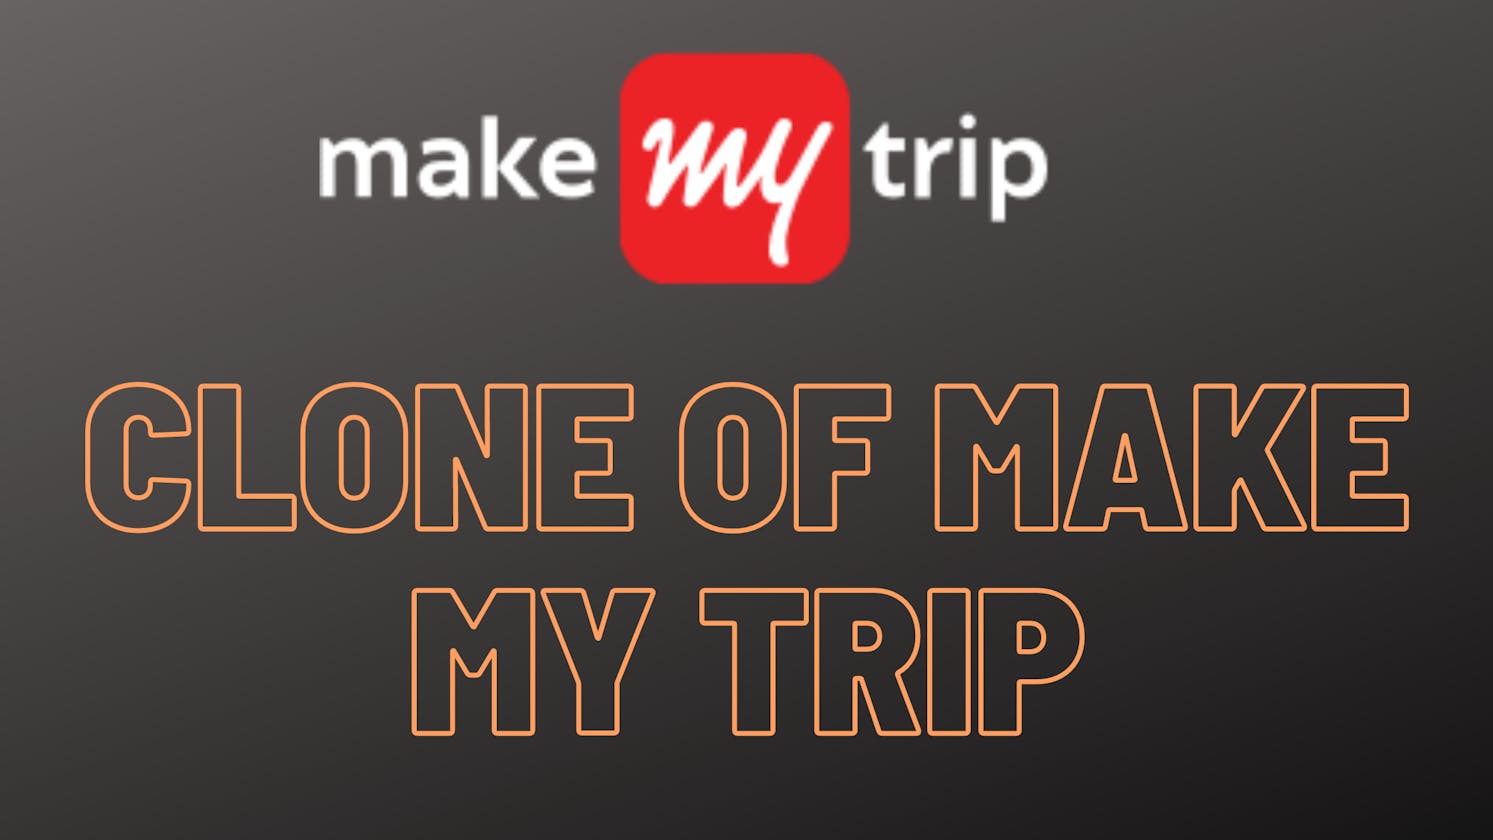 Make a clone of Make my trip